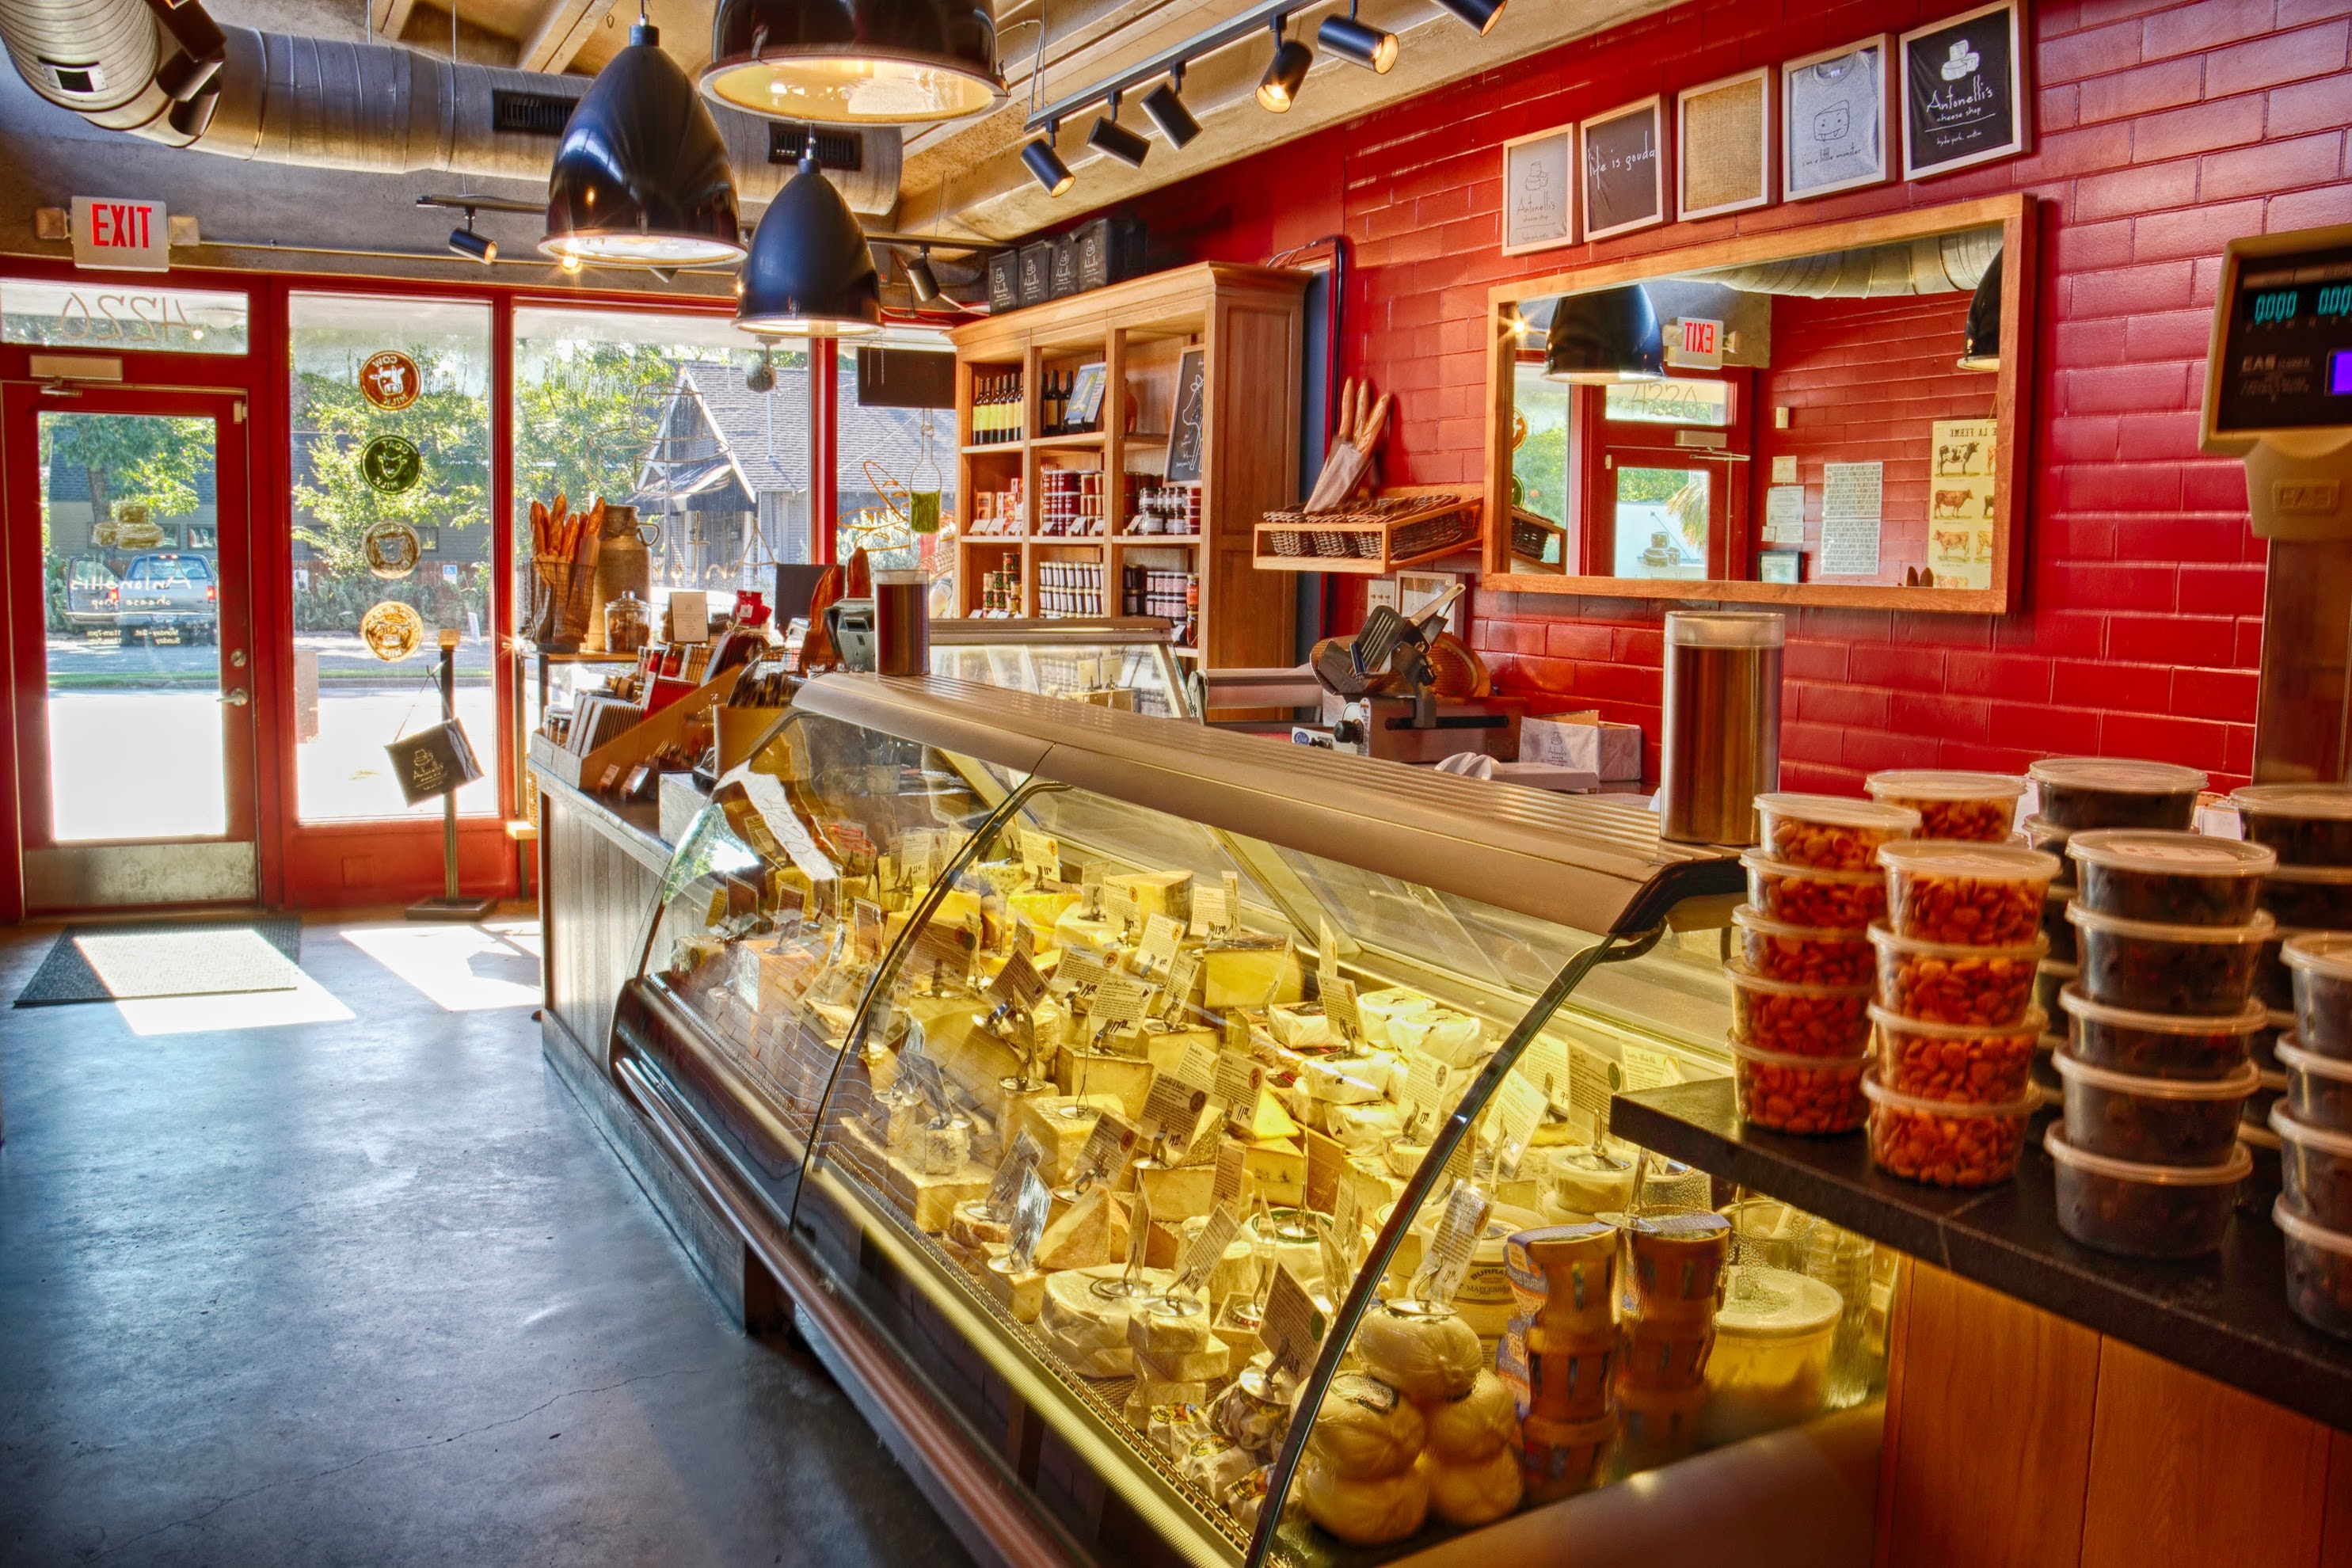 Austin Venues: Antonelli's Cheese Shop